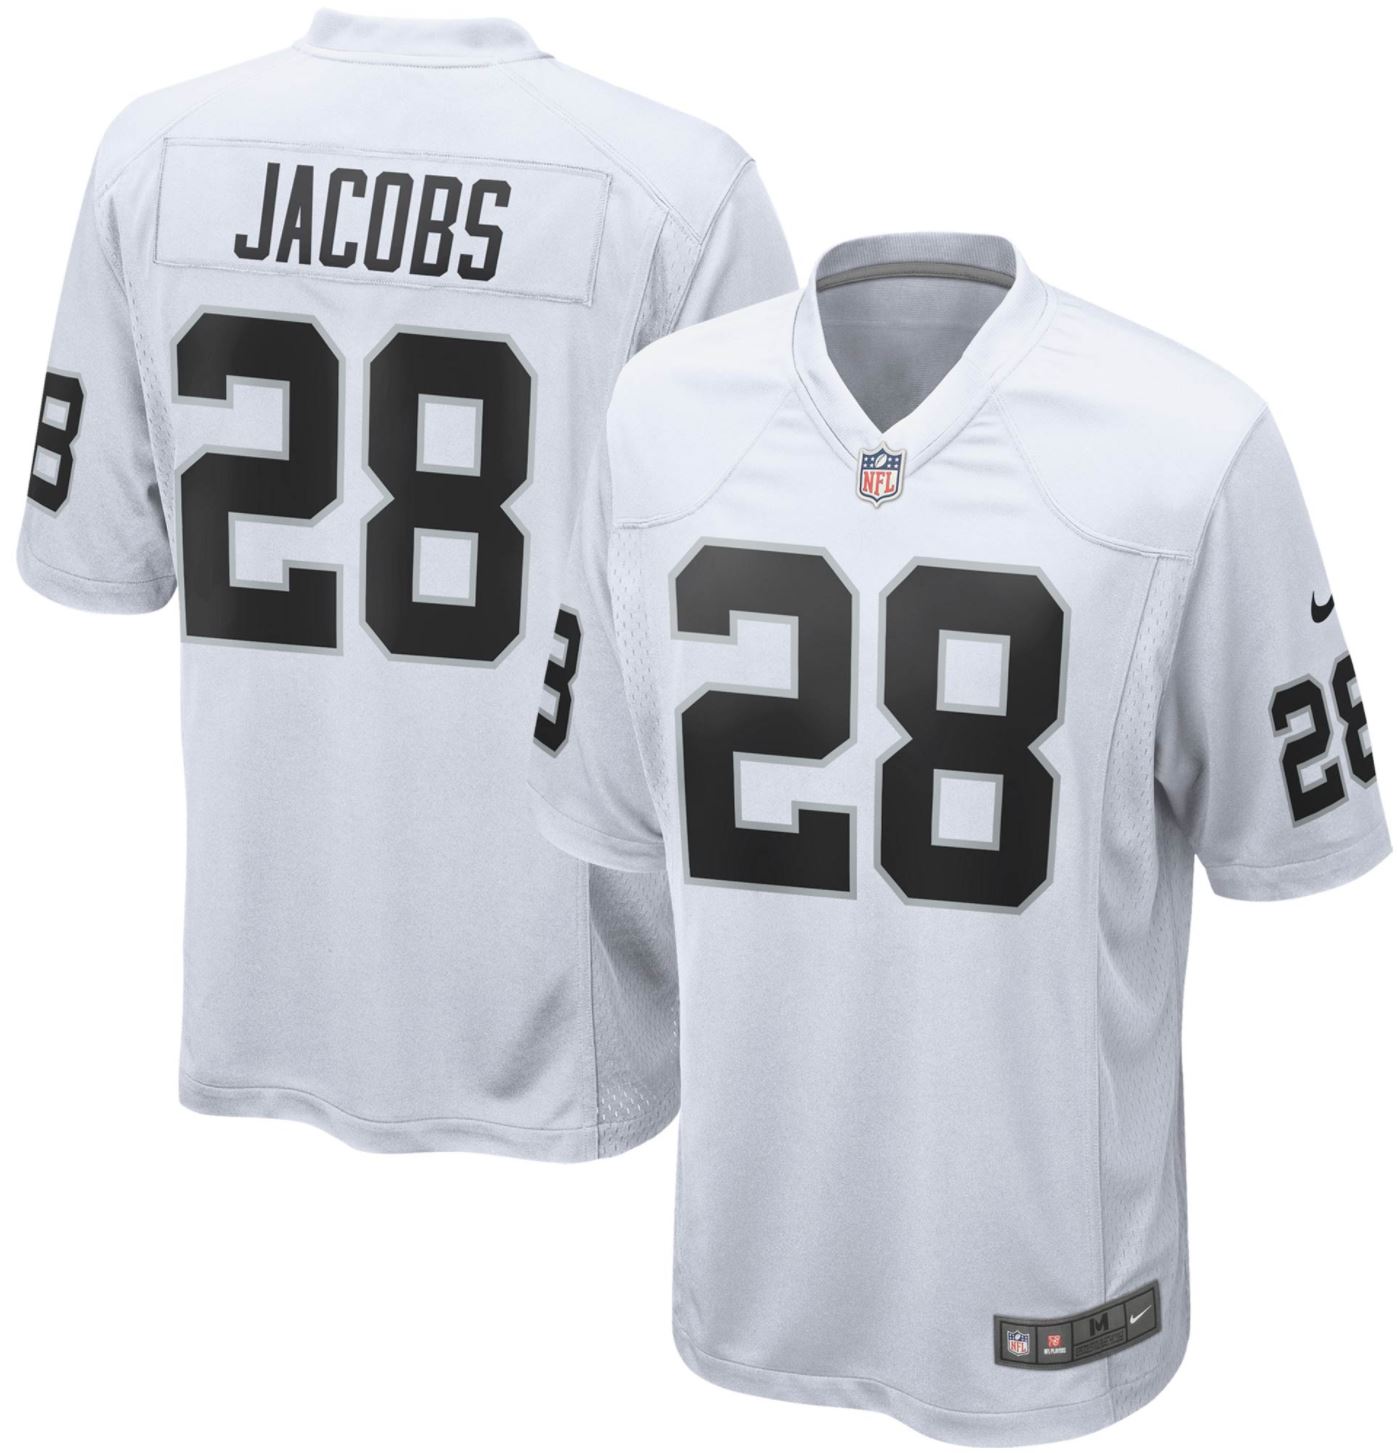 Josh Jacobs #28 Las Vegas Raiders 2021 White Game Jersey